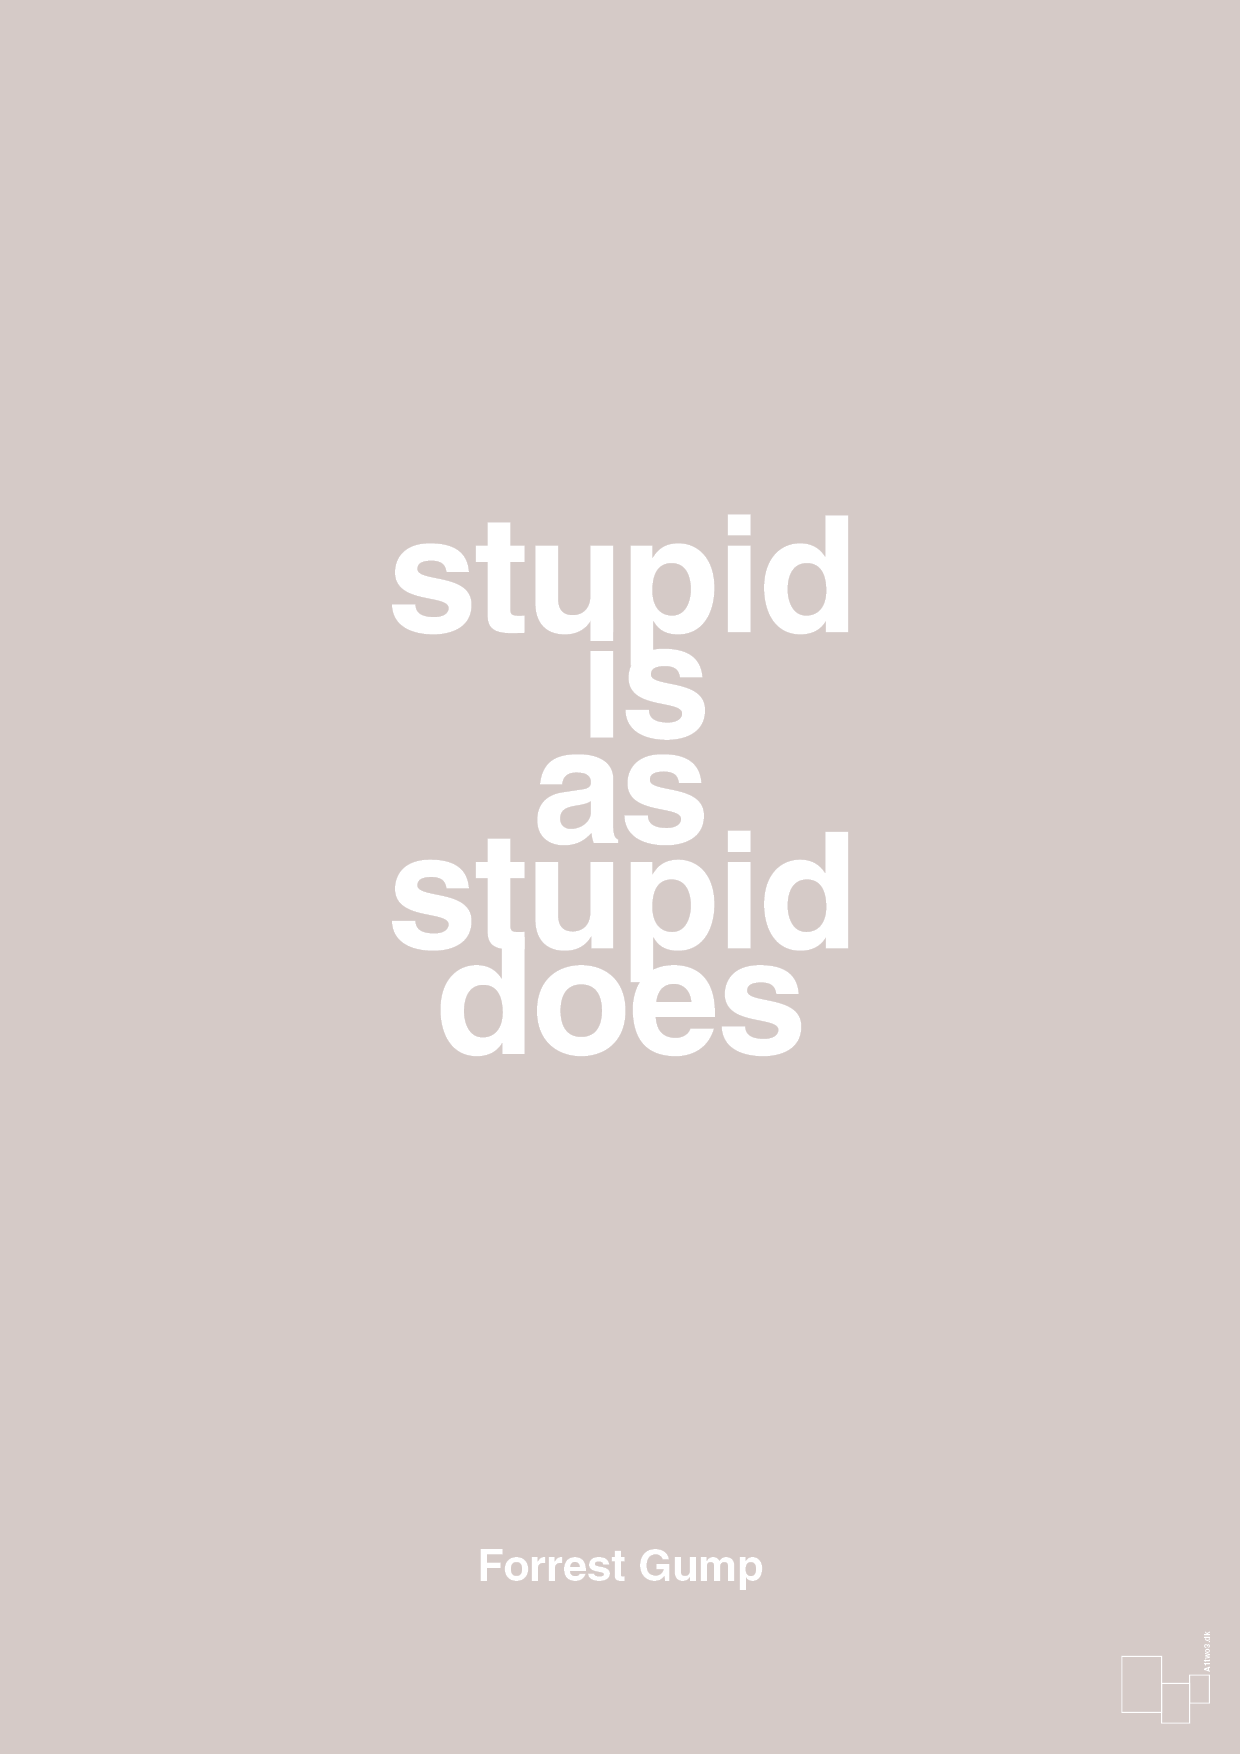 stupid is as stupid does - Plakat med Citater i Broken Beige